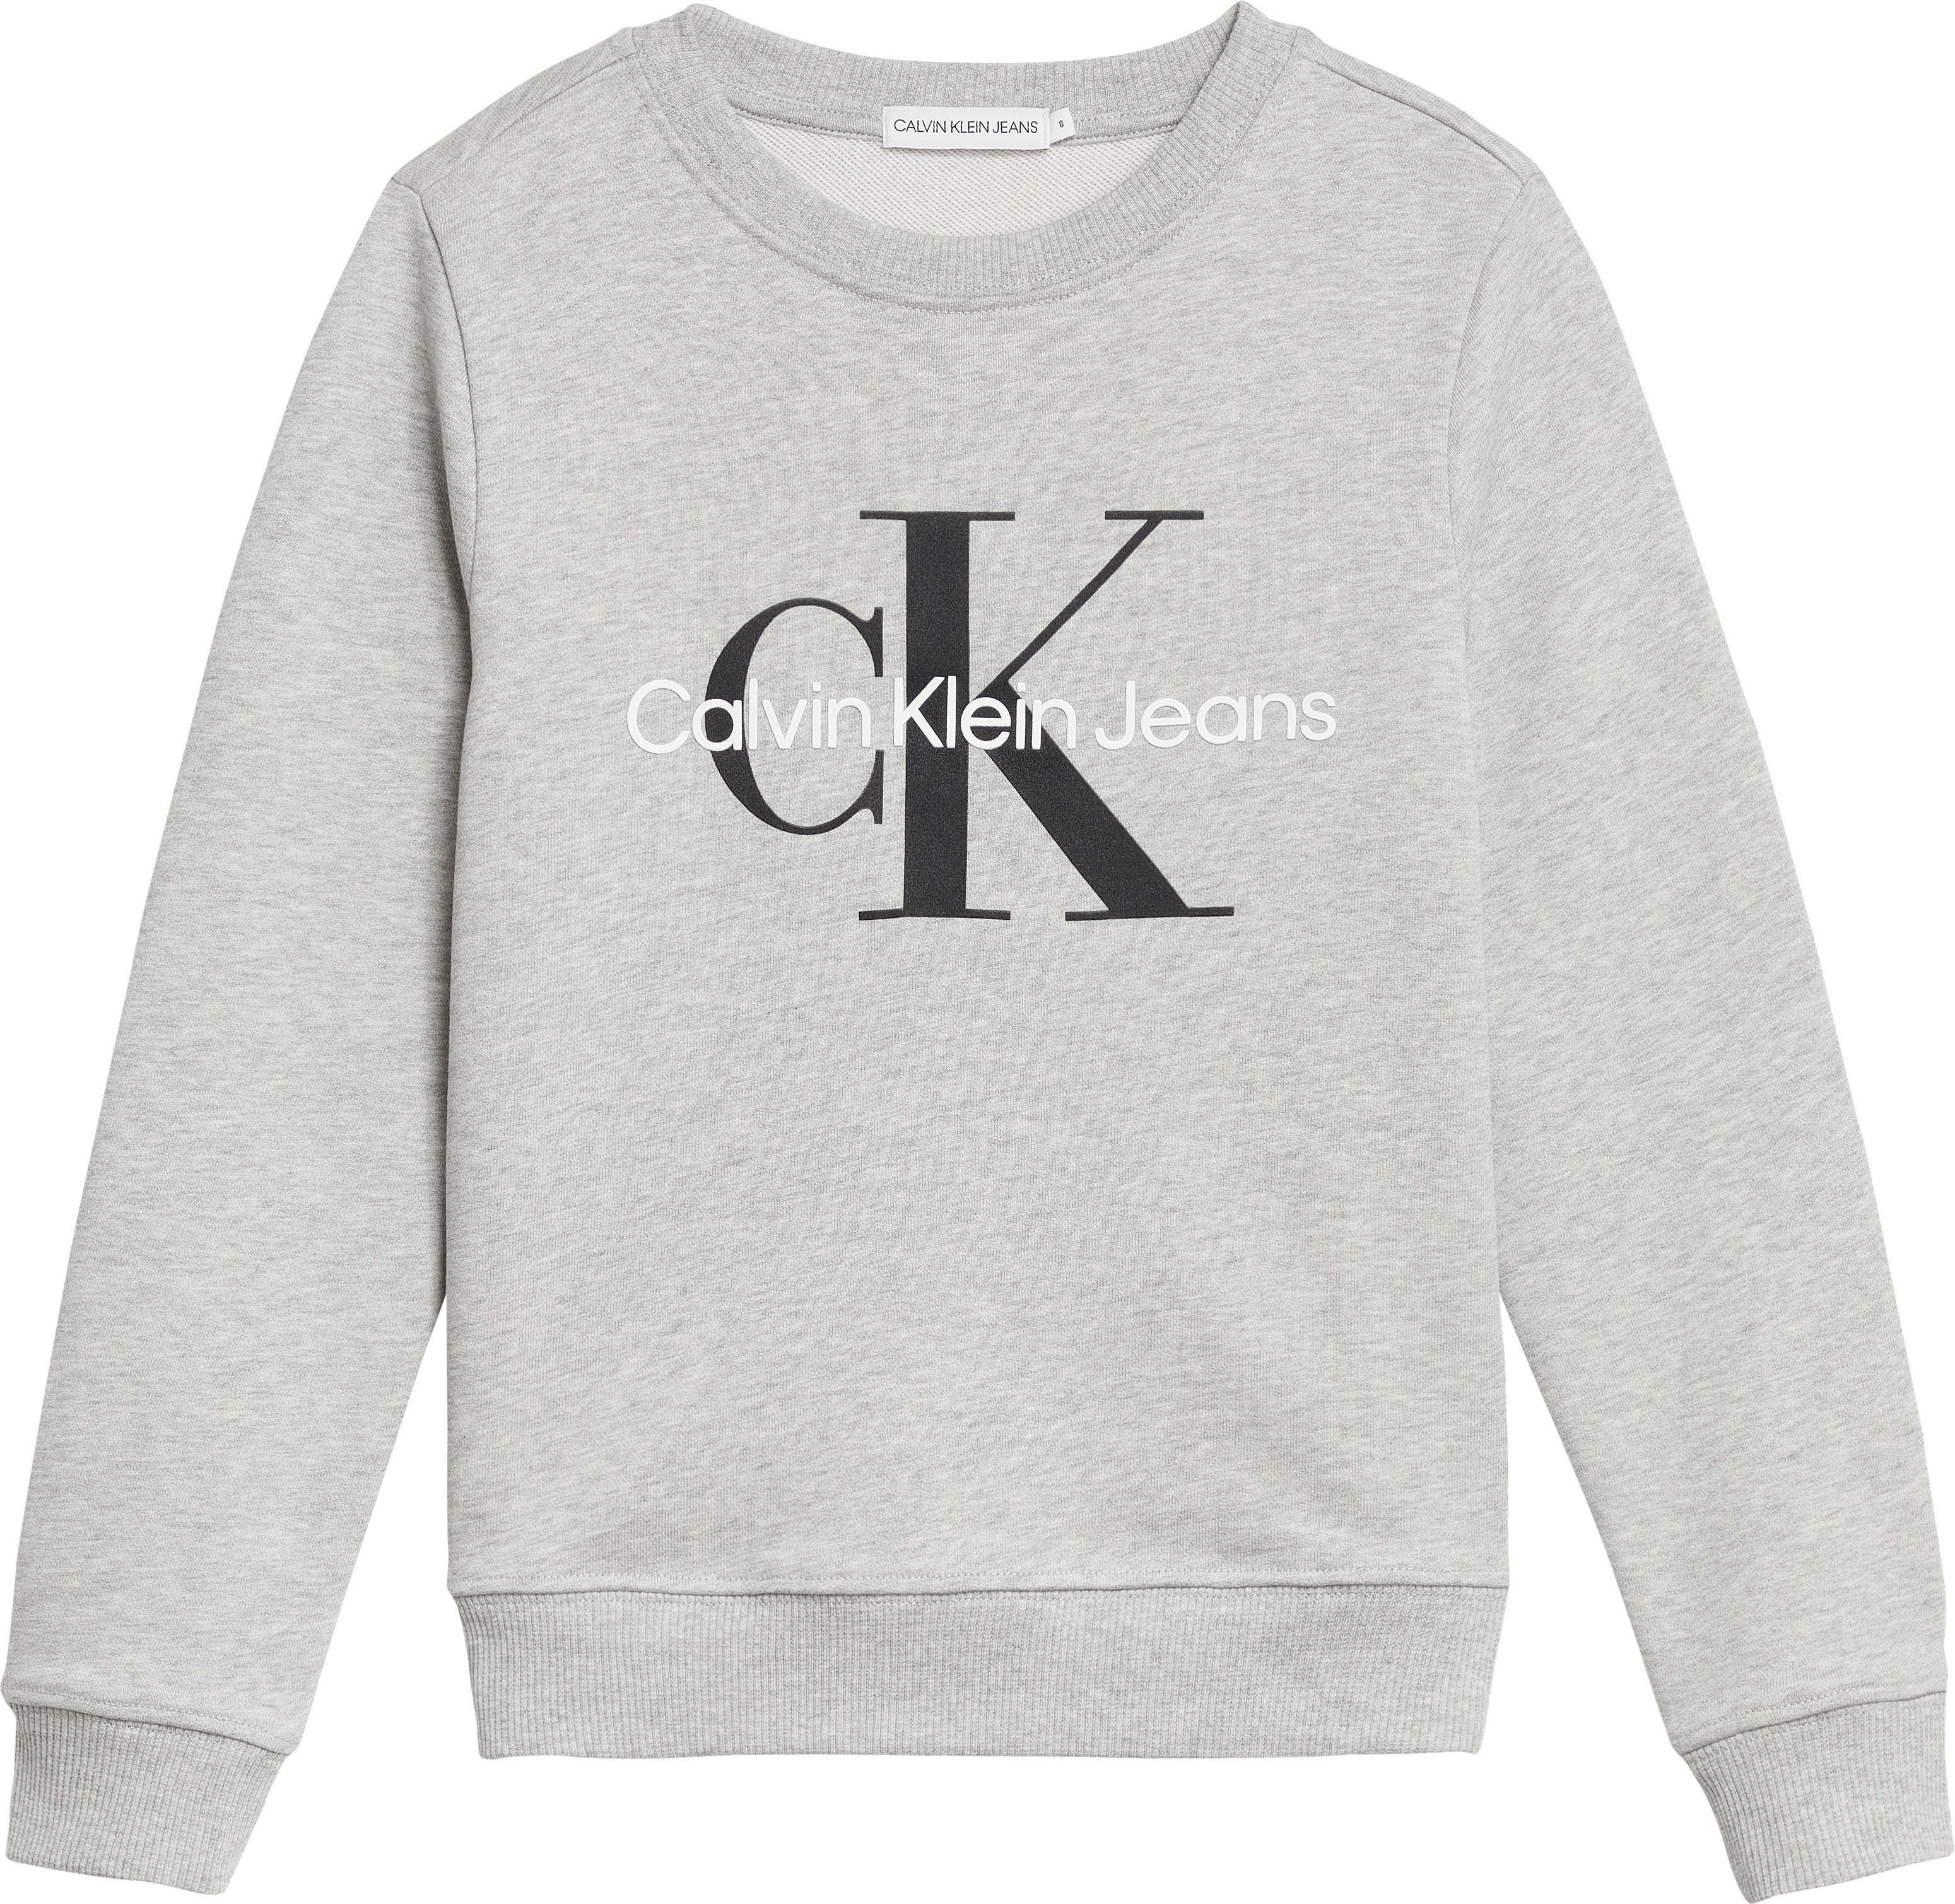 Calvin Klein Jeans hellgrau MONOGRAM LOGO Sweatshirt SWEATSHIRT